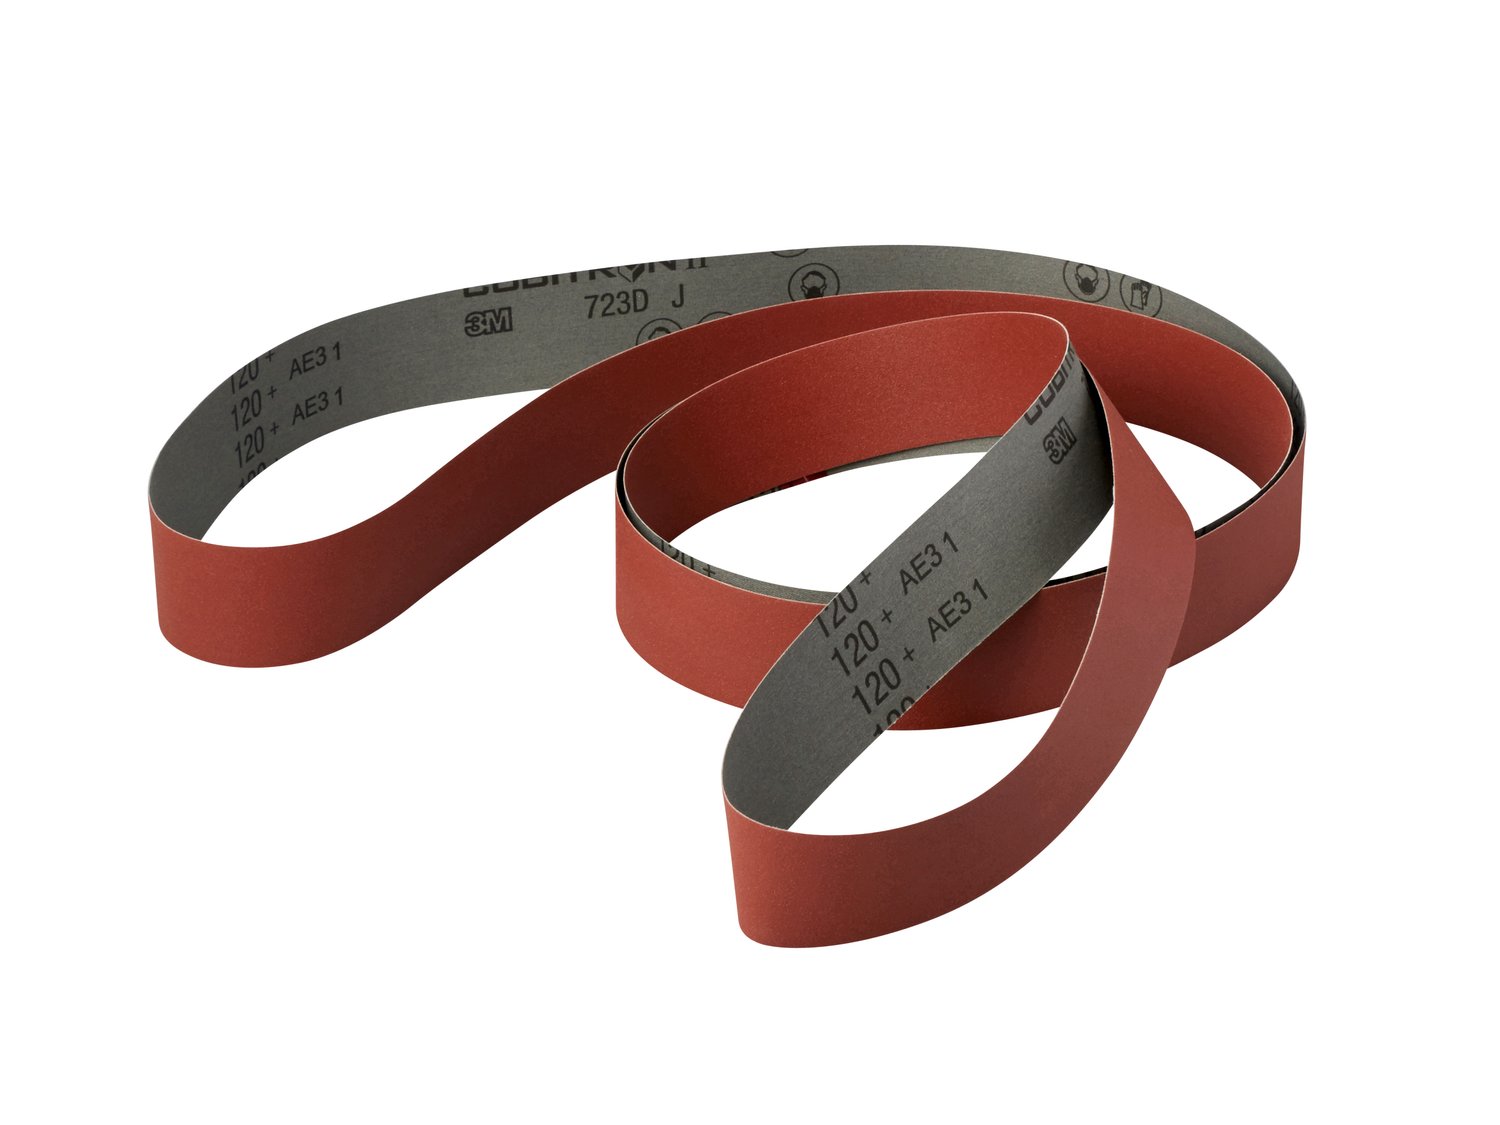 7010515530 - 3M Cubitron ll Cloth Belt 723D, 180+ J-weight, 4-1/2 in x 110 in,
Film-lok, Full-flex